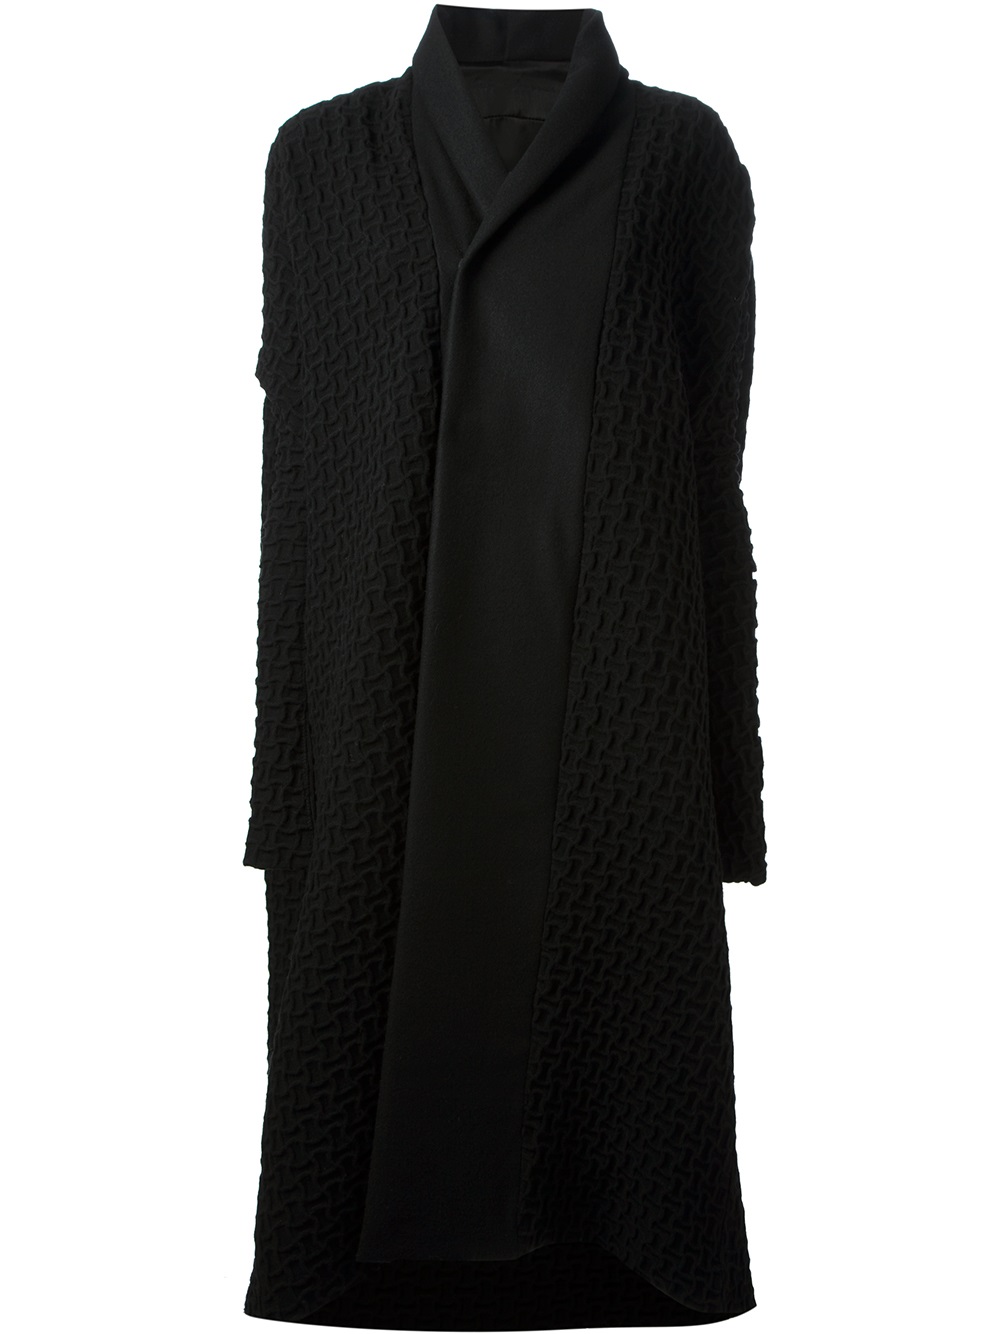 Lyst - Rick Owens Oversized Coat in Black